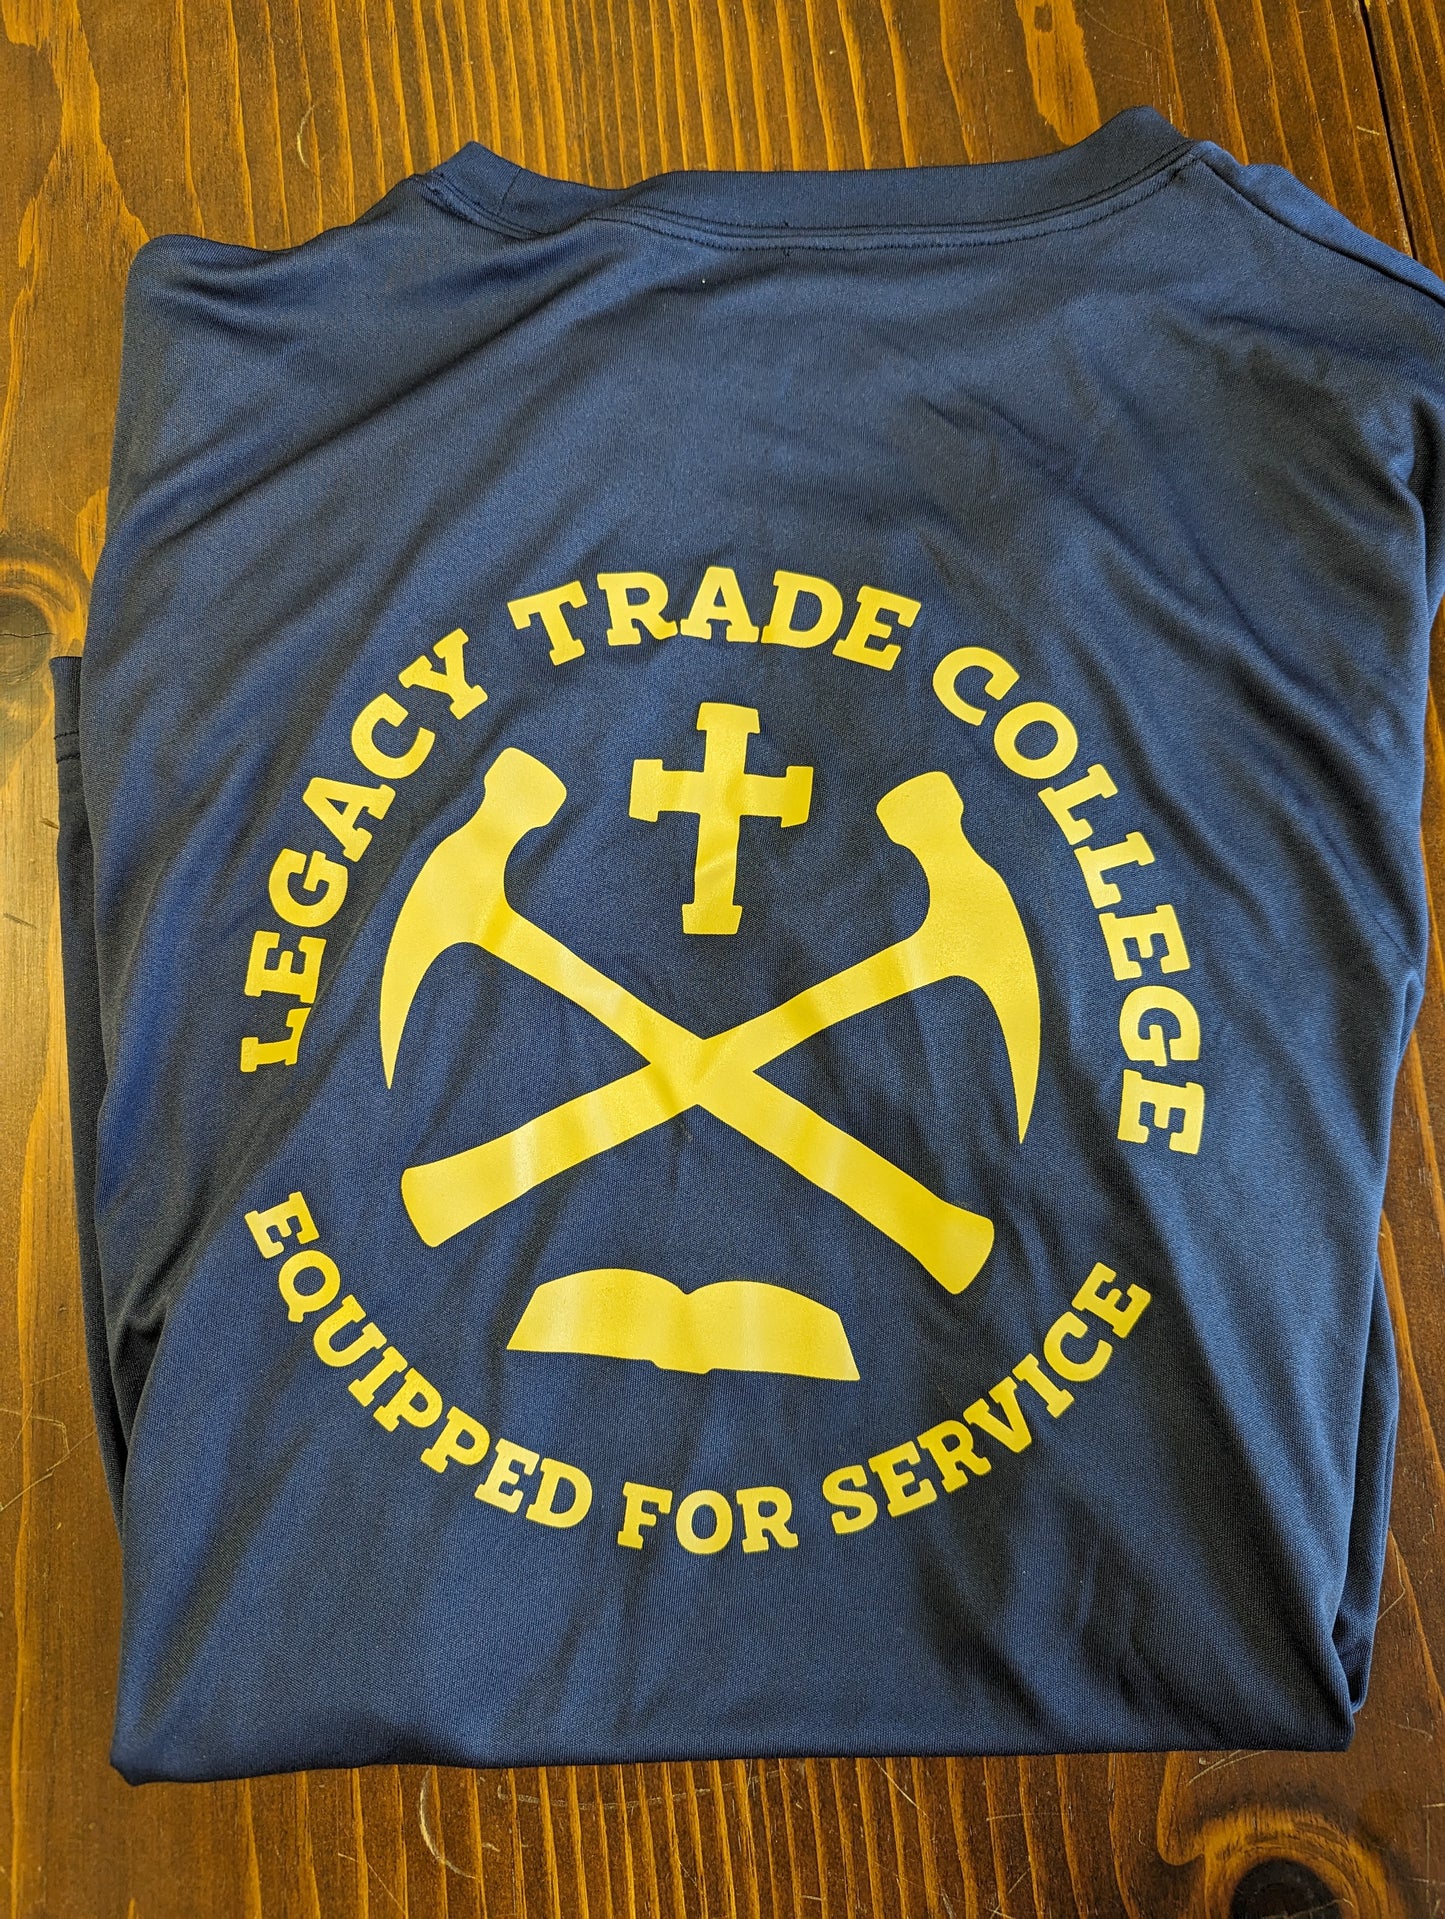 Legacy Trade College Logo t-shirt